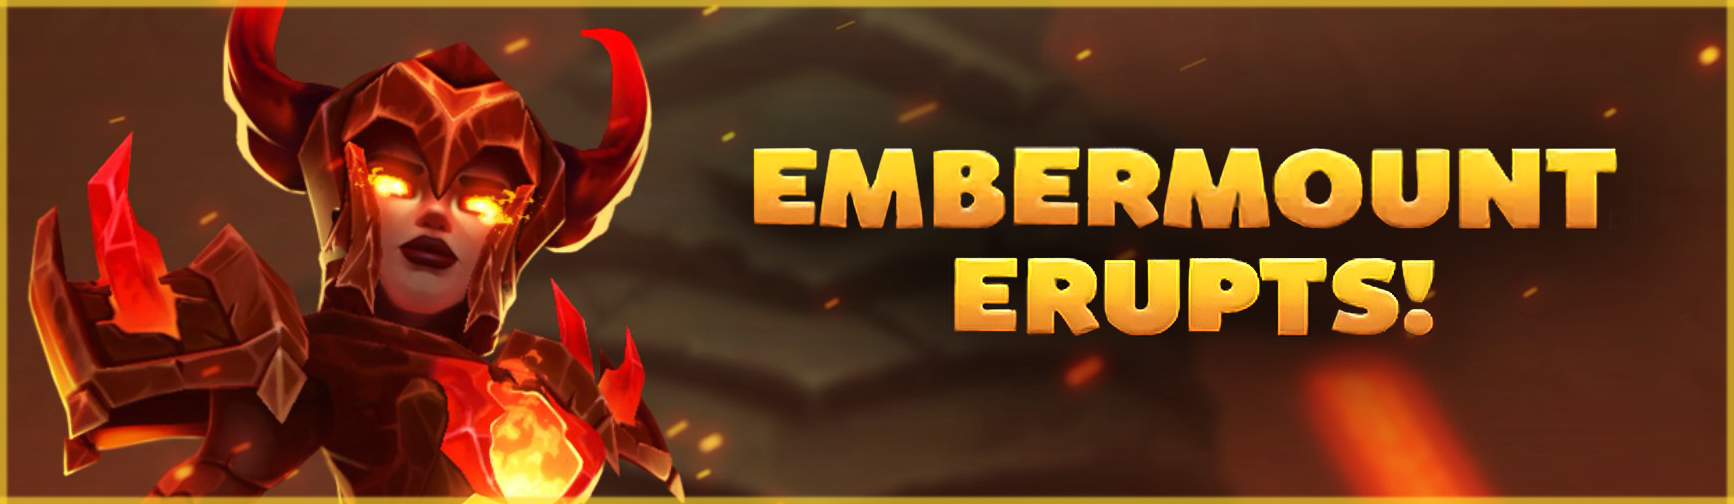 Embermount Erupts Banner.png